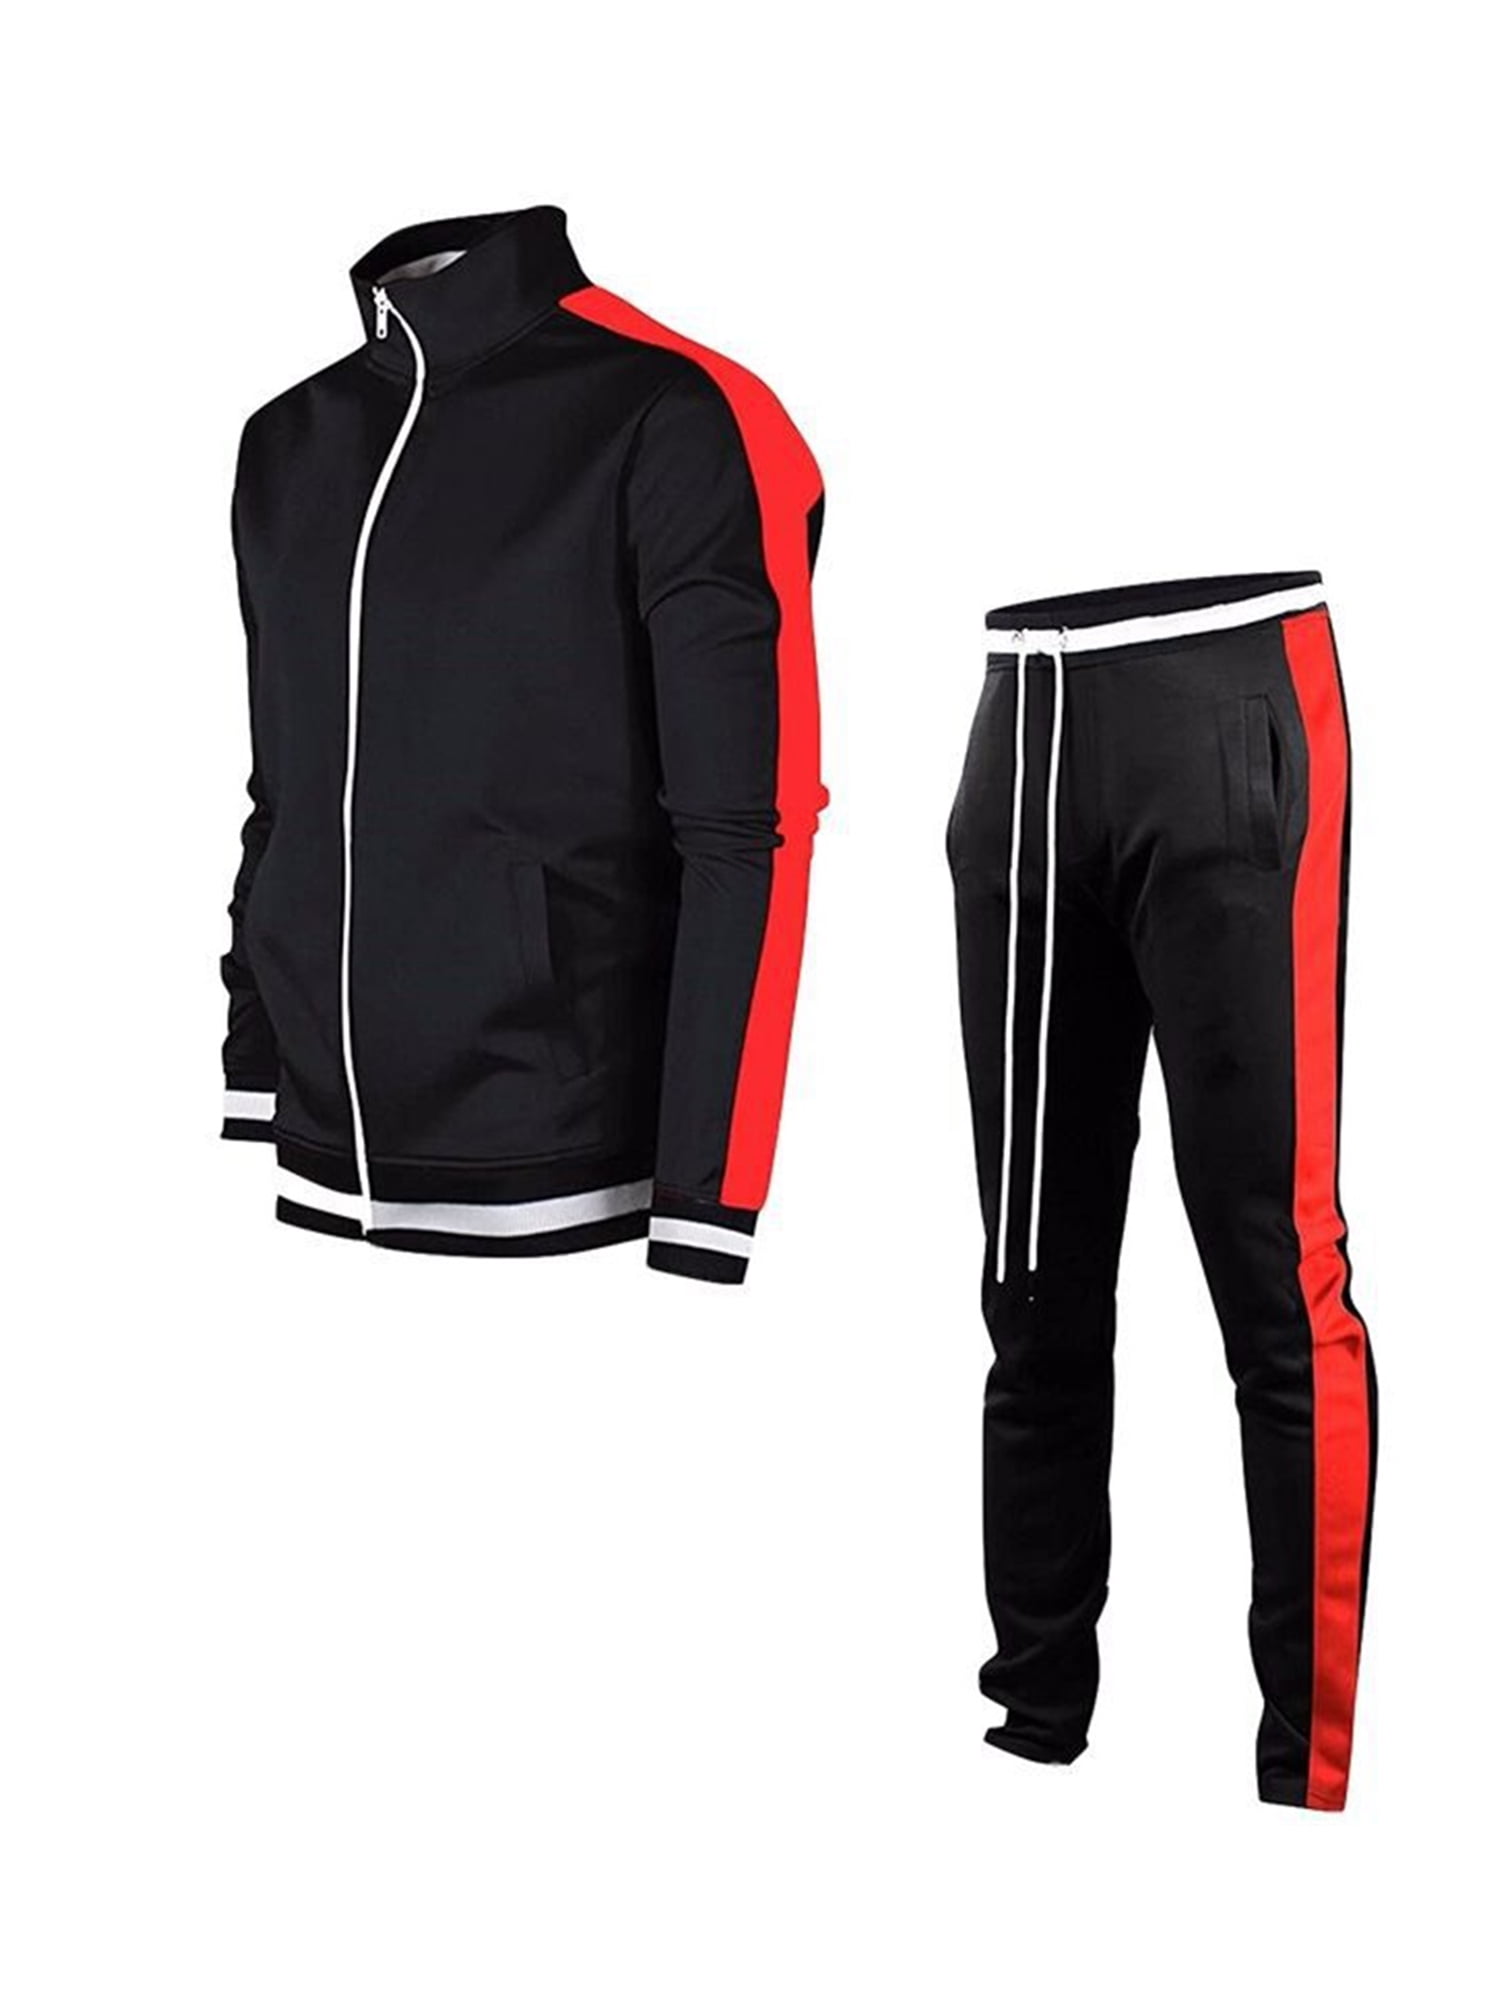 Men's Tracksuit Athletic Full Zip Casual Sports Jogging Gym Sweatsuit Jacket 